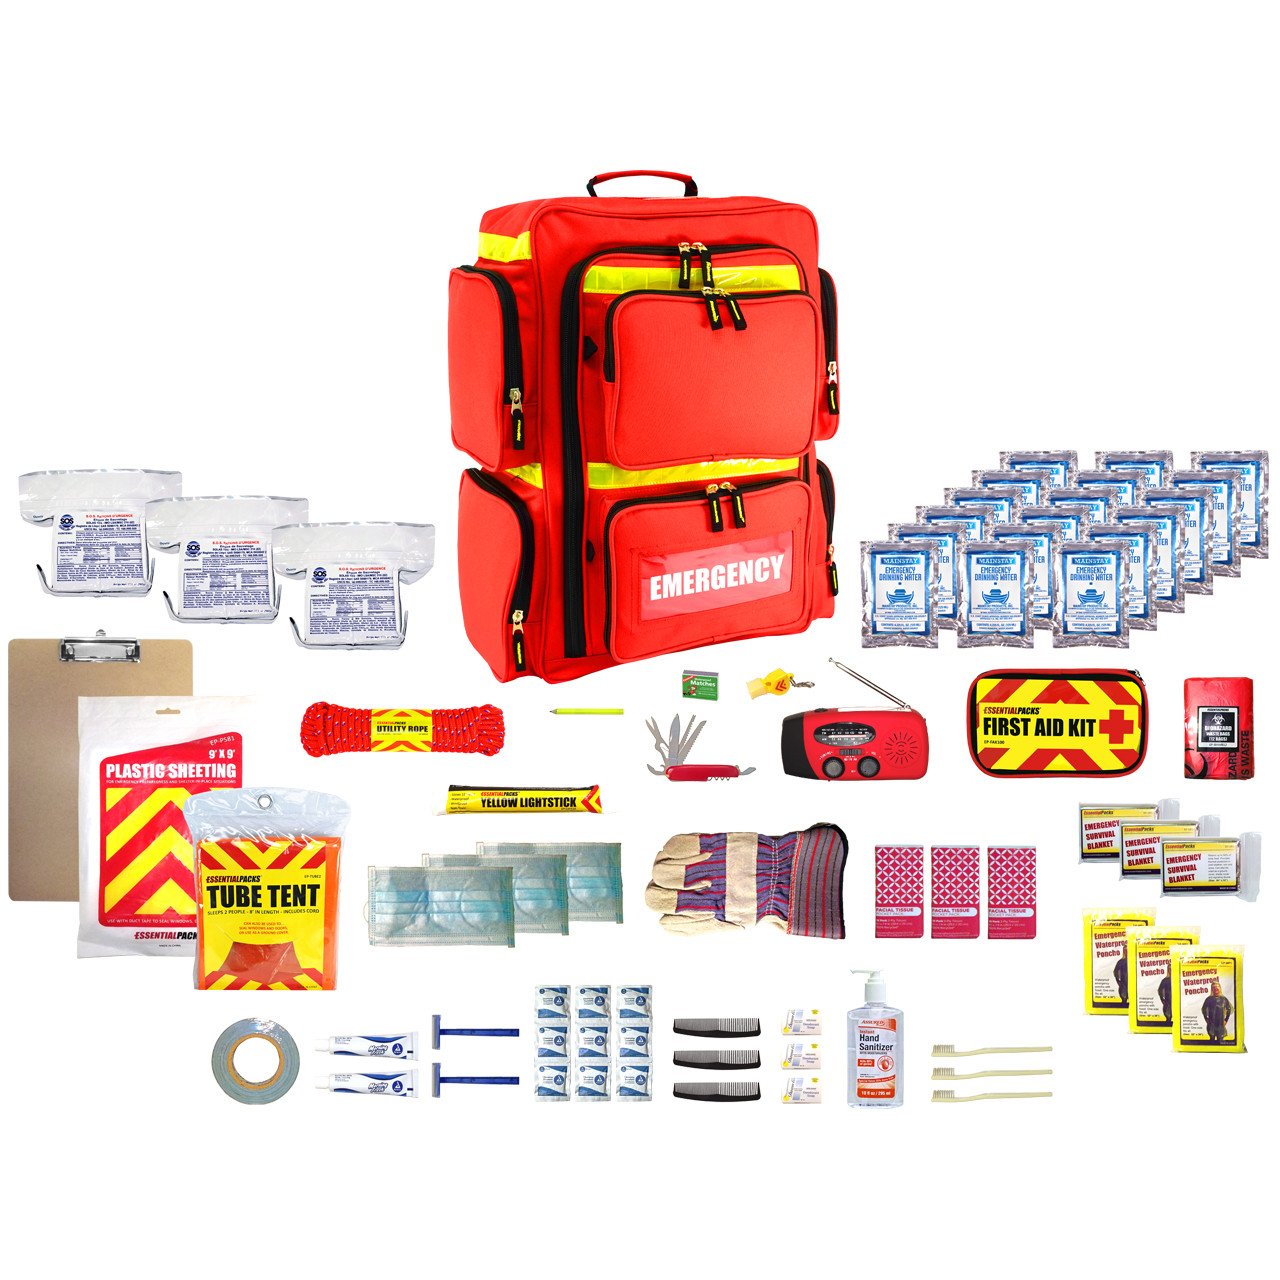 72 Hour Kit  Buy a 72 Hour Emergency Kit Online - Valley Food Storage